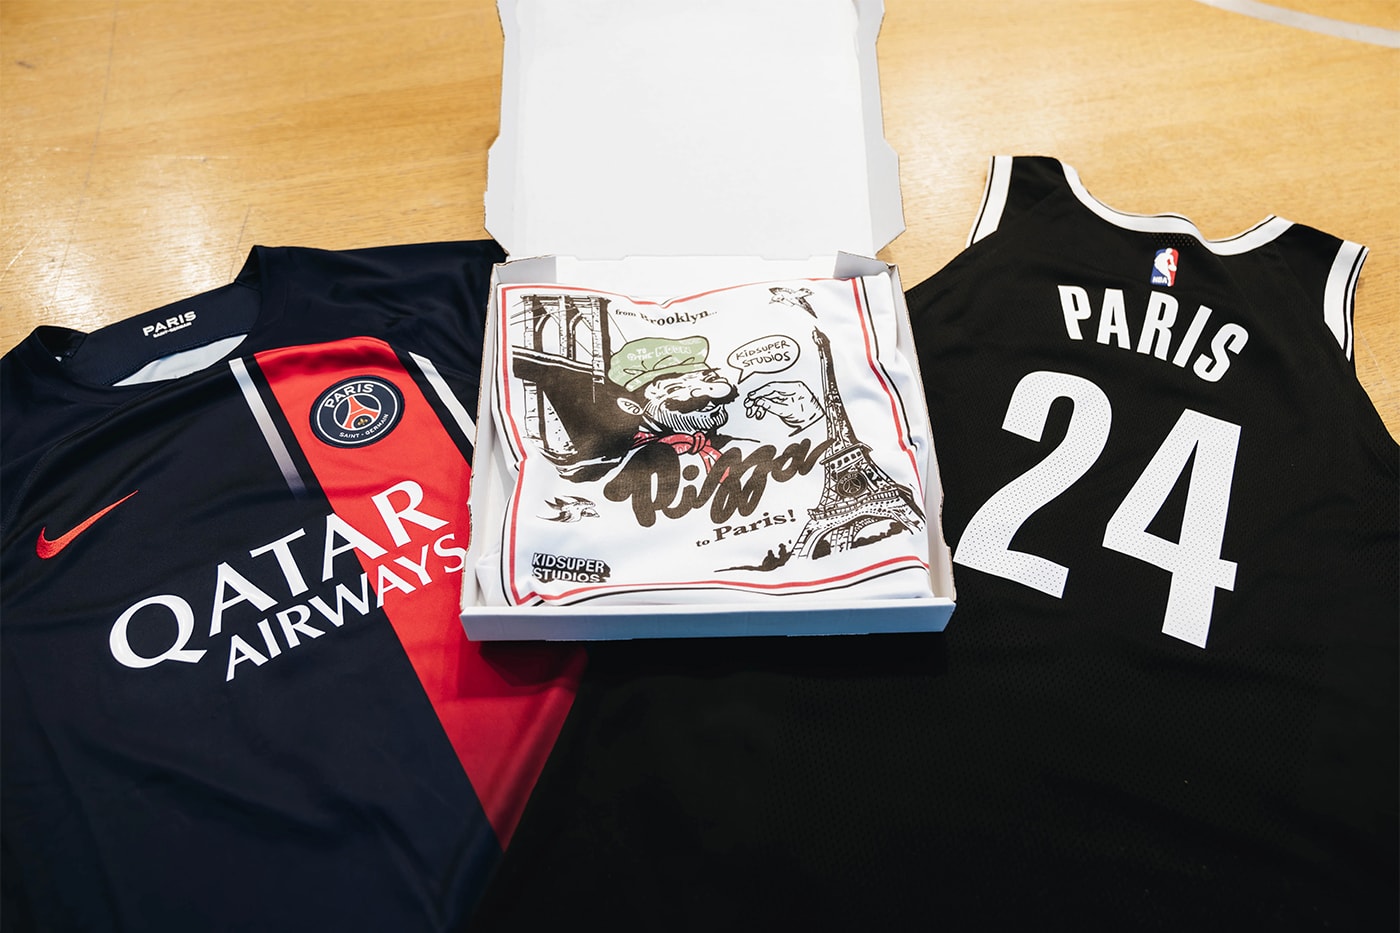 Brooklyn Nets Celebrates Paris NBA Game With Kidsuper and Paris Saint-Germain Merch Collaboration nba paris game 2024 cleveland cavaliers paris pizza parlor eiffel tower colm dillane